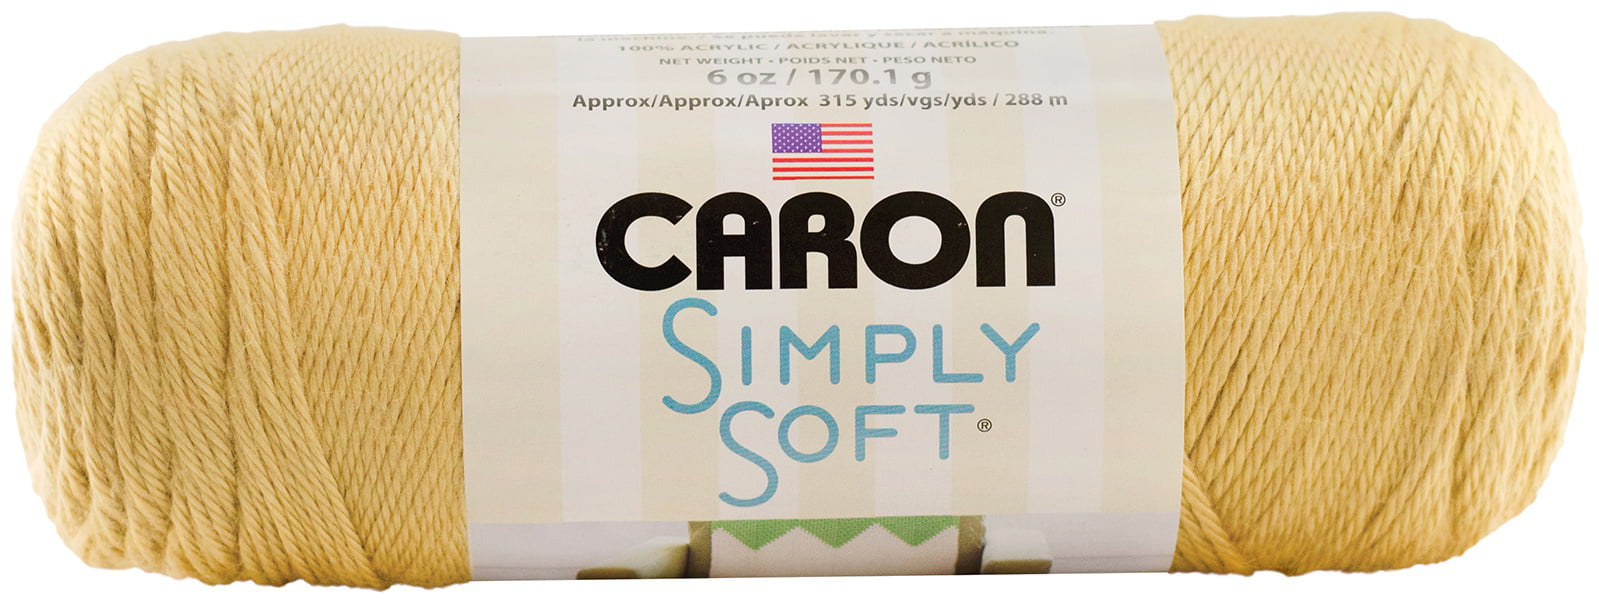 2-pack Autumn Maize Caron Simply Soft Yarn Solids Bulk Buy